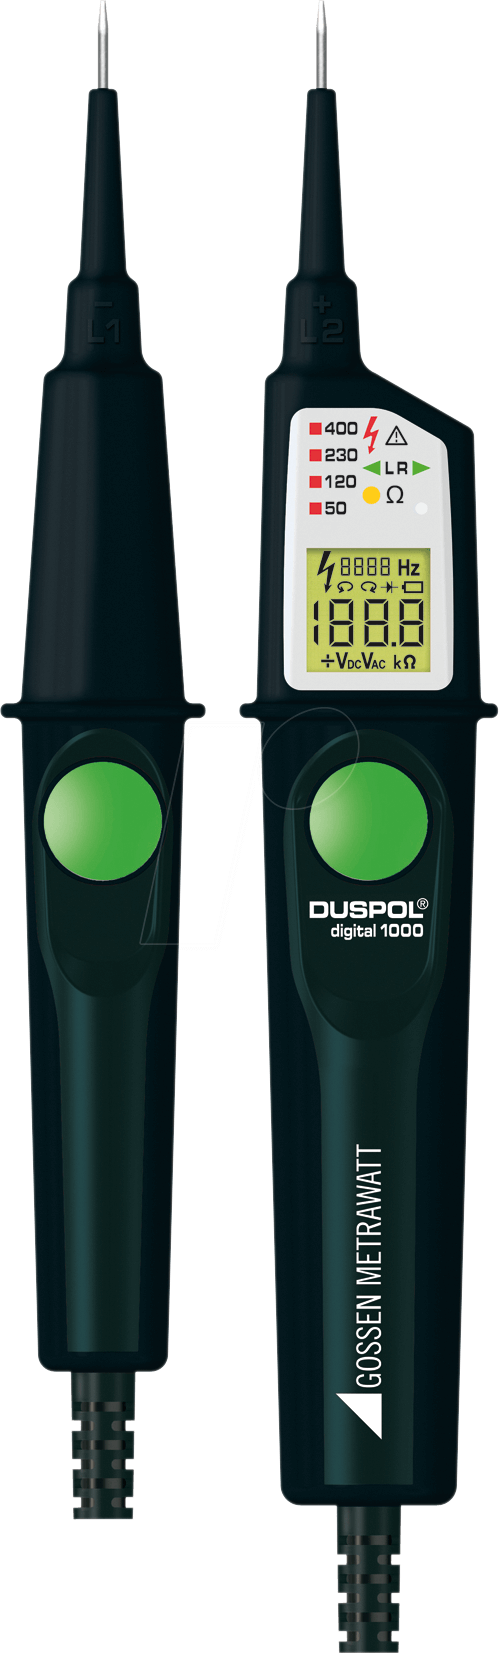 DP DIGITAL 1000 - Spannungsprüfer DUSPOL Digital 1000, 12-1000 V AC/DC, LCD von Gossen Metrawatt